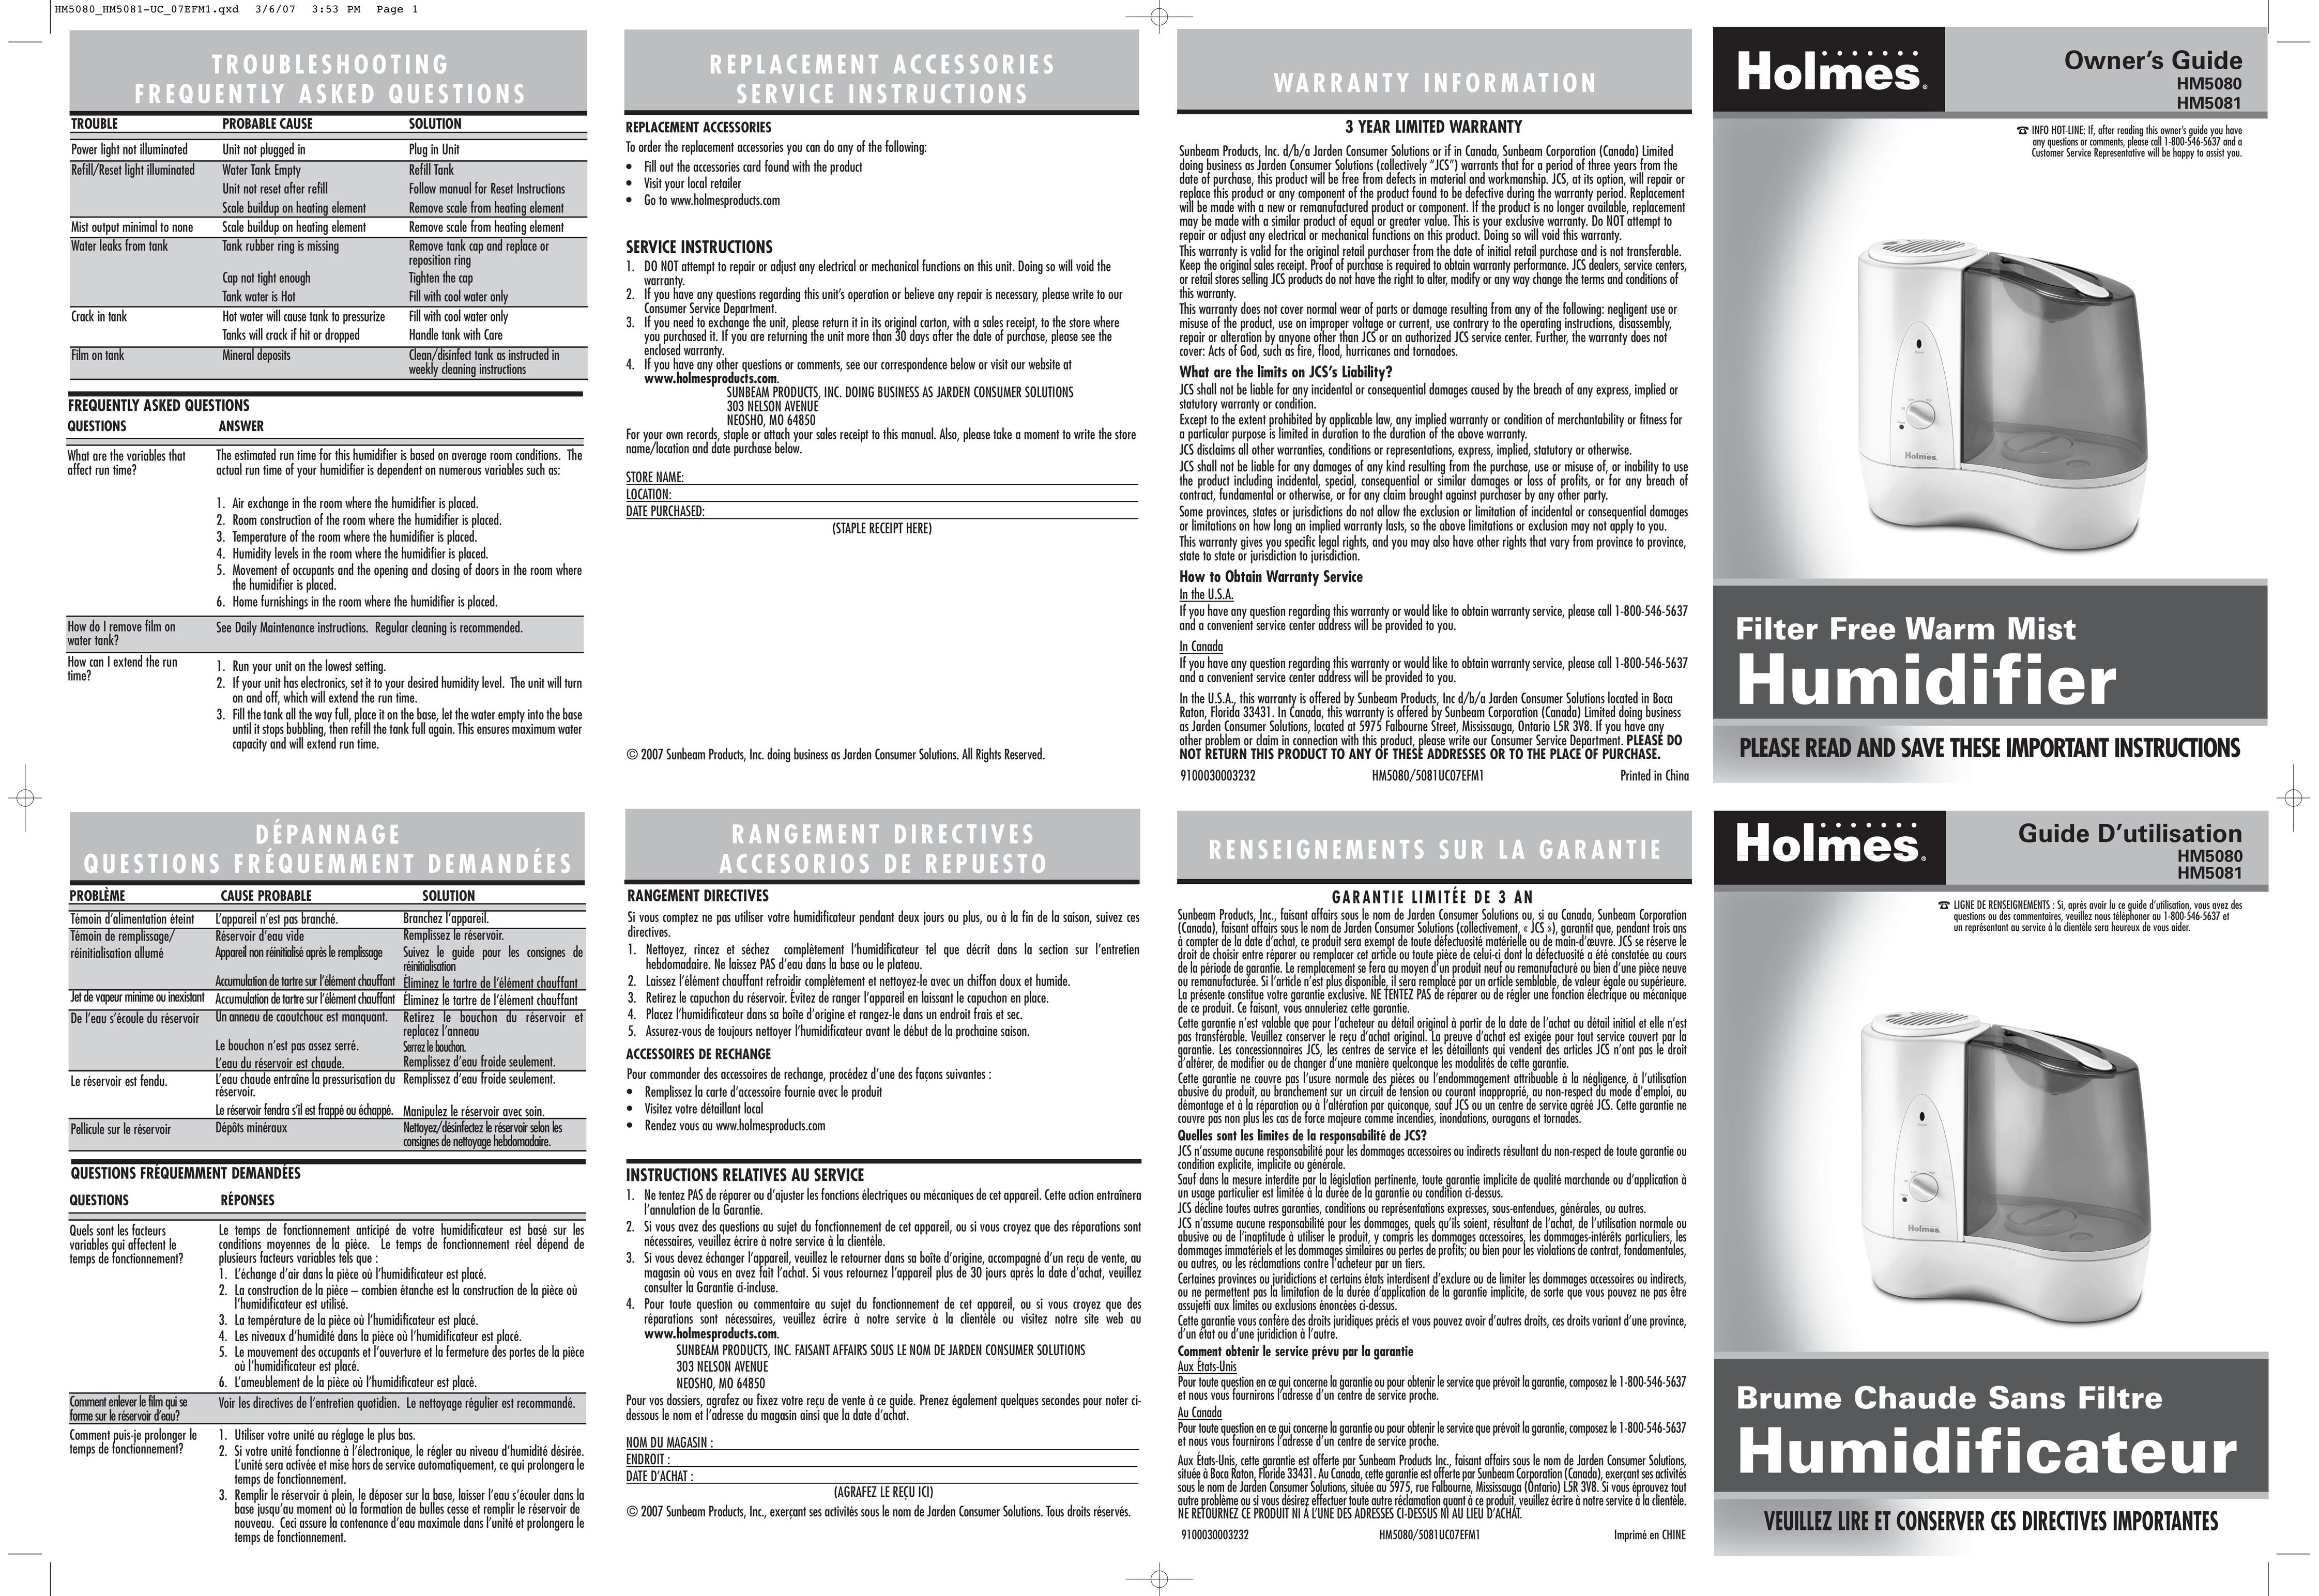 Holmes HM5081 Humidifier User Manual